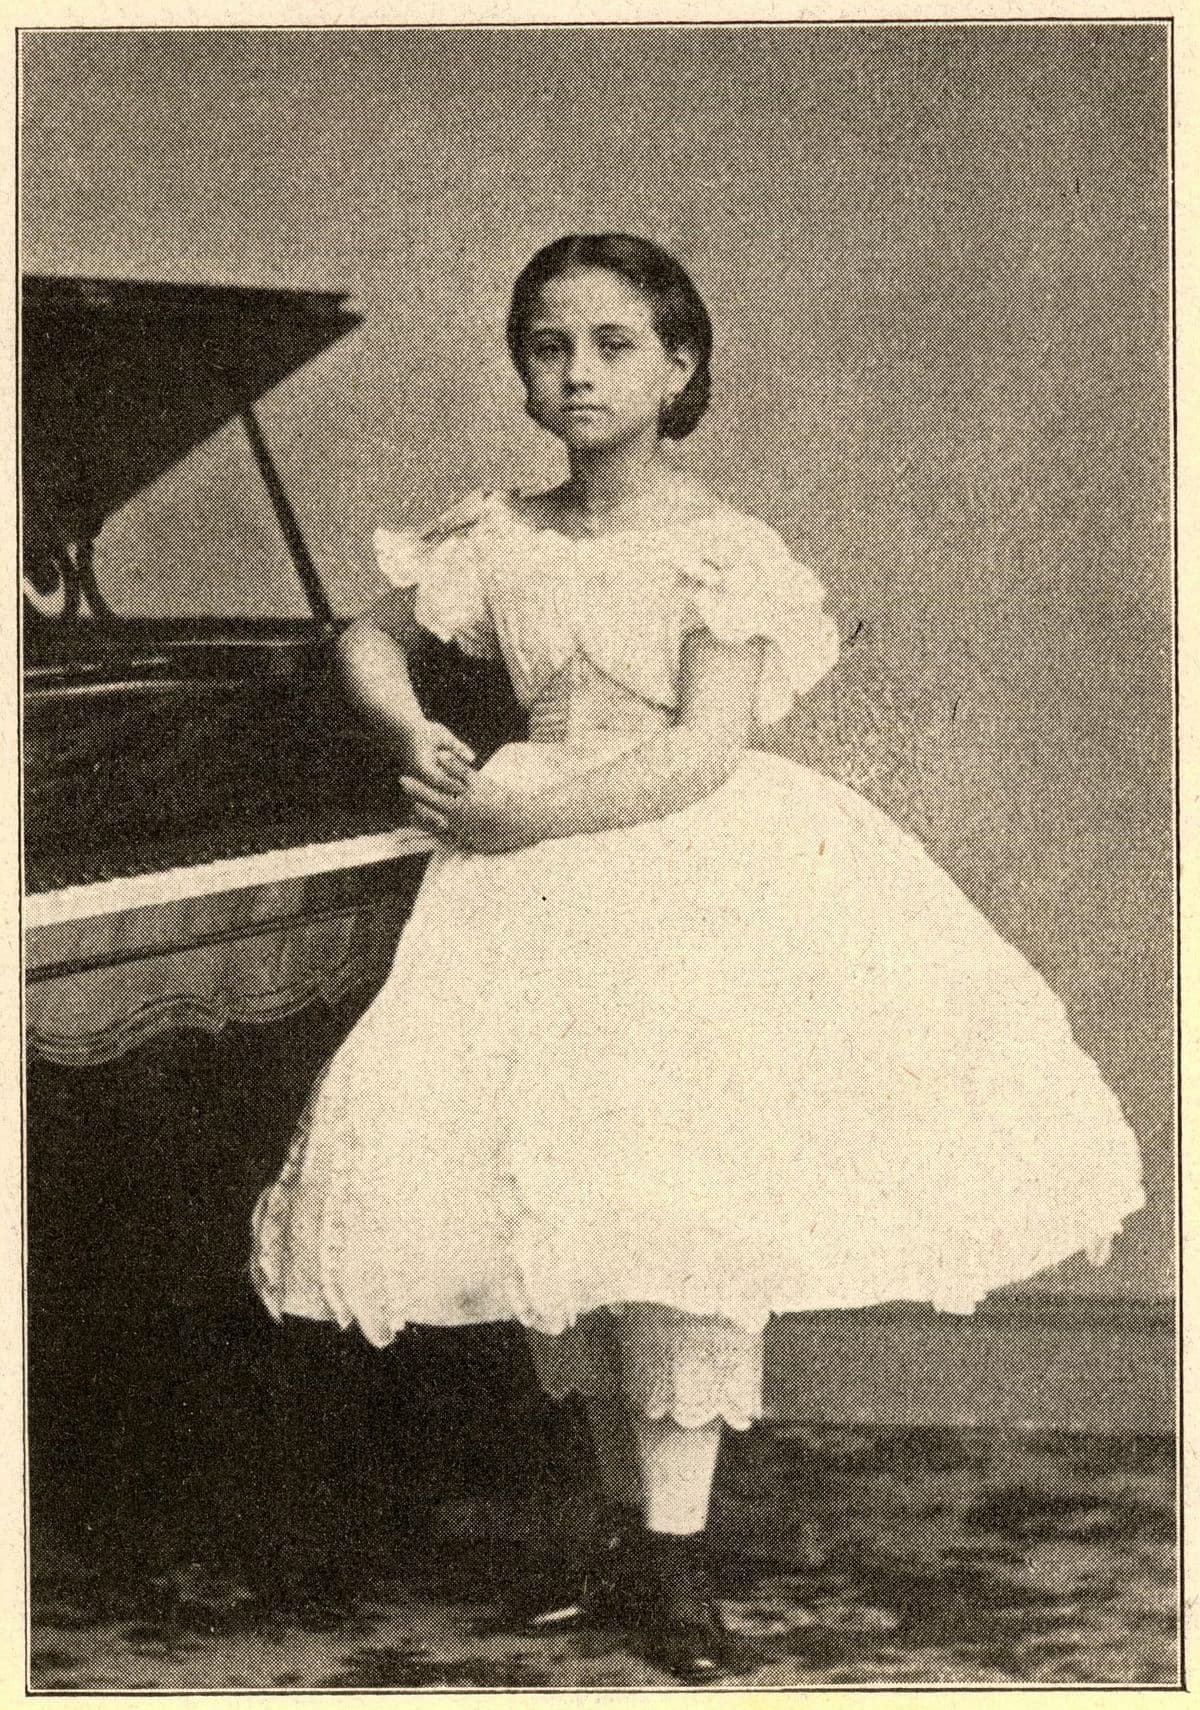 Teresa Carreño as a young girl